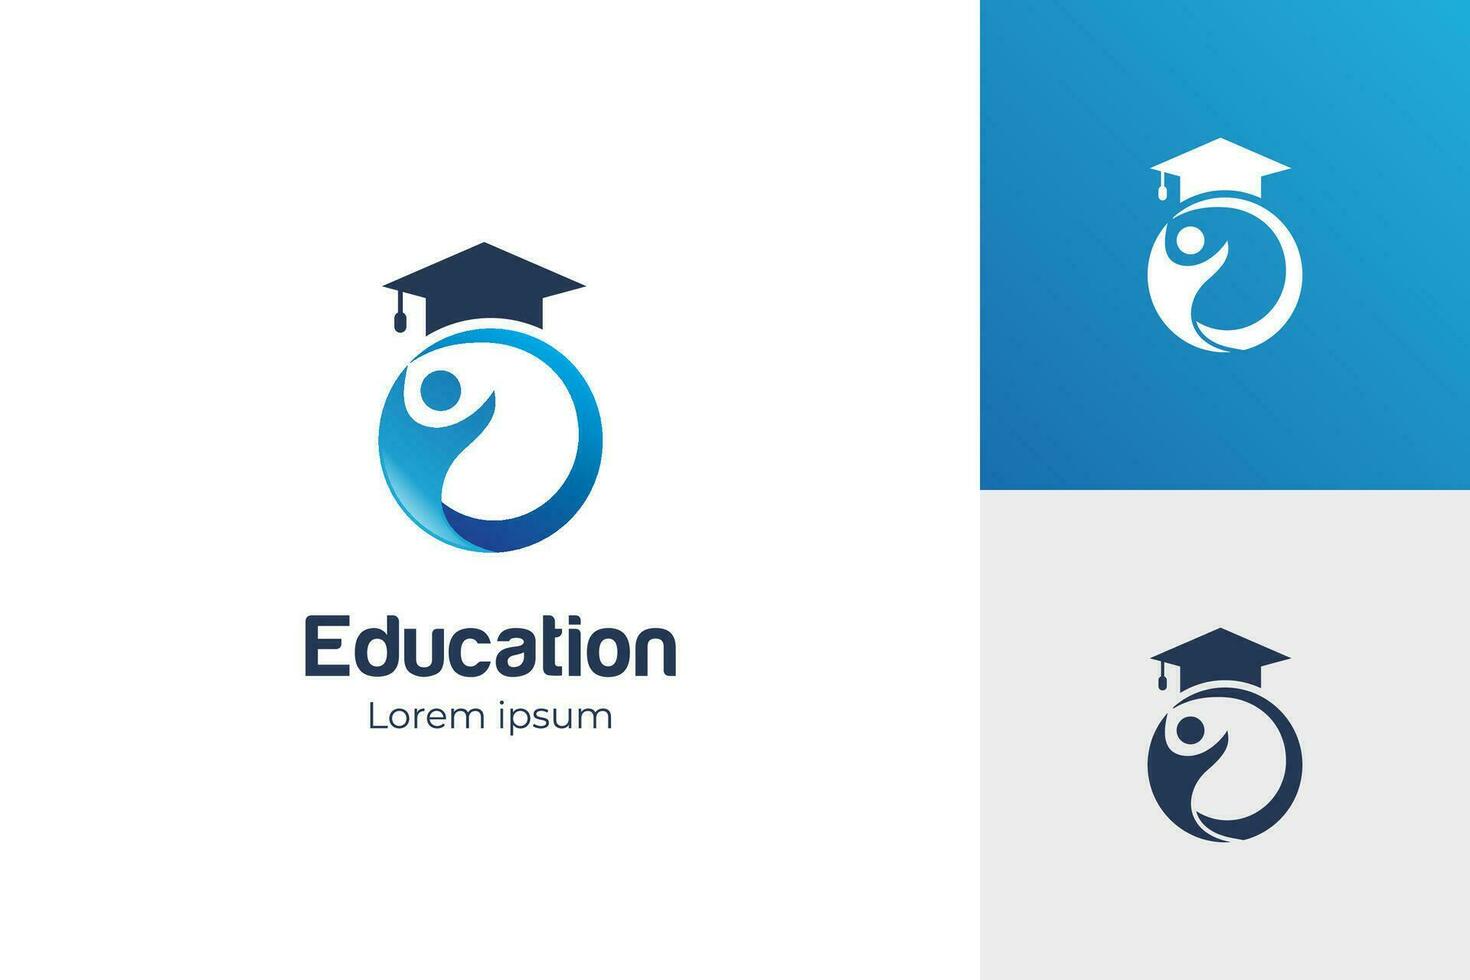 Graduate hat or cap and college student logo icon design for Education logo design illustration vector